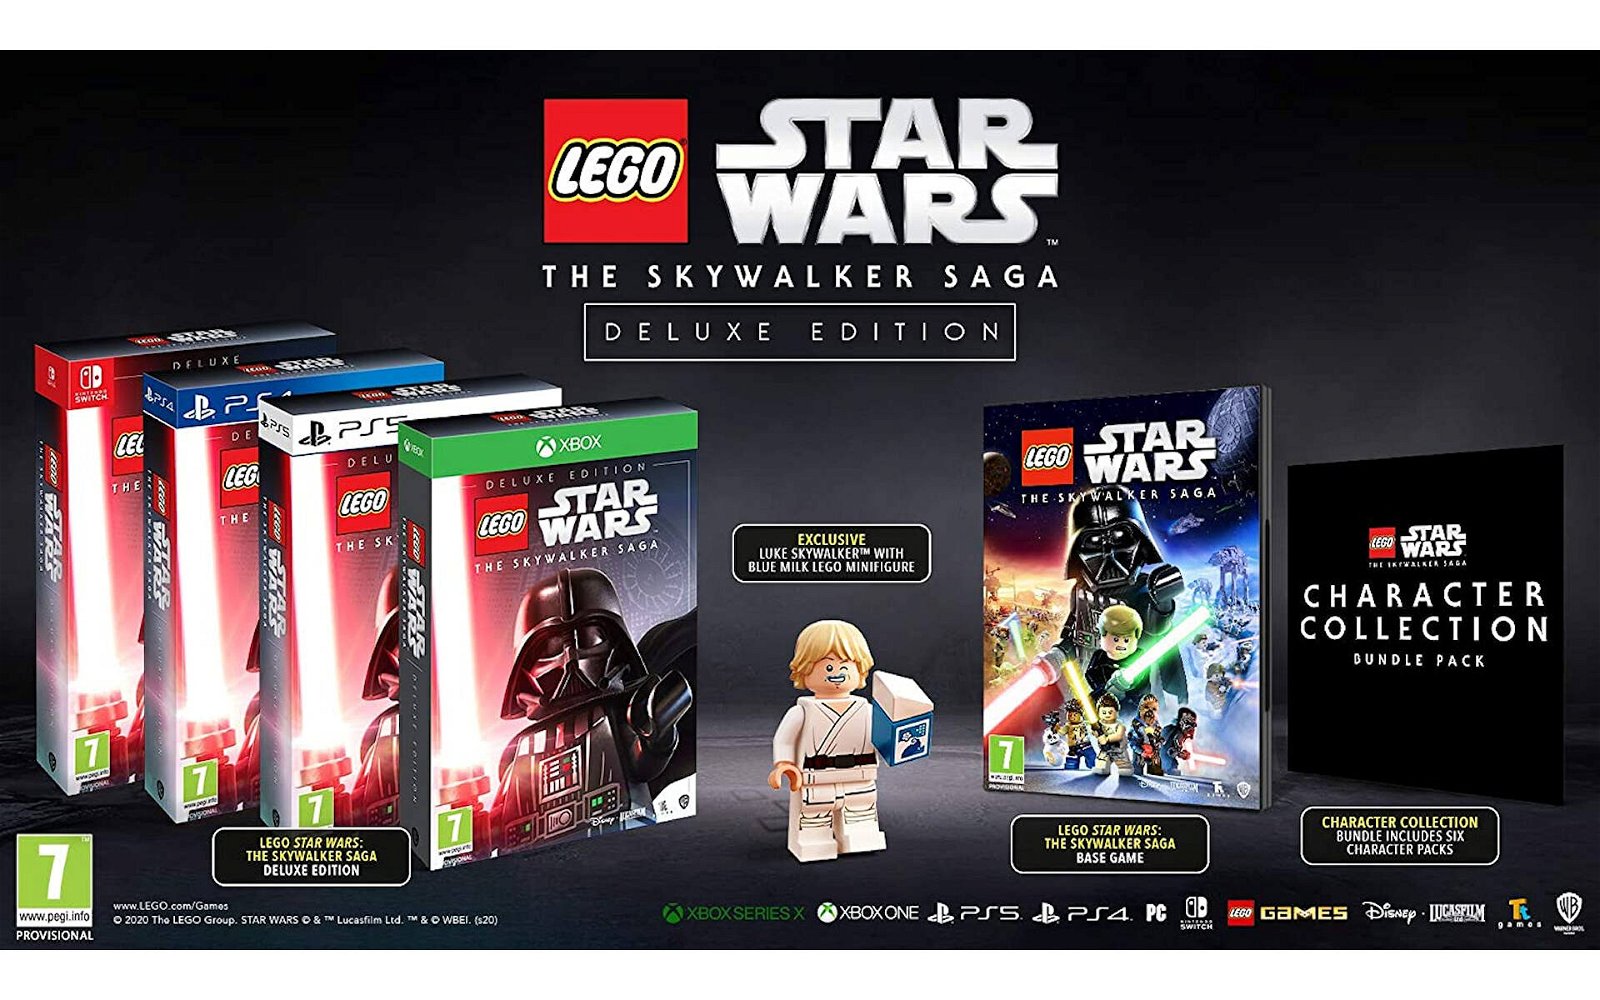 Immagine di LEGO Star Wars - polybag # 30625 in omaggio con The Skywalker Saga